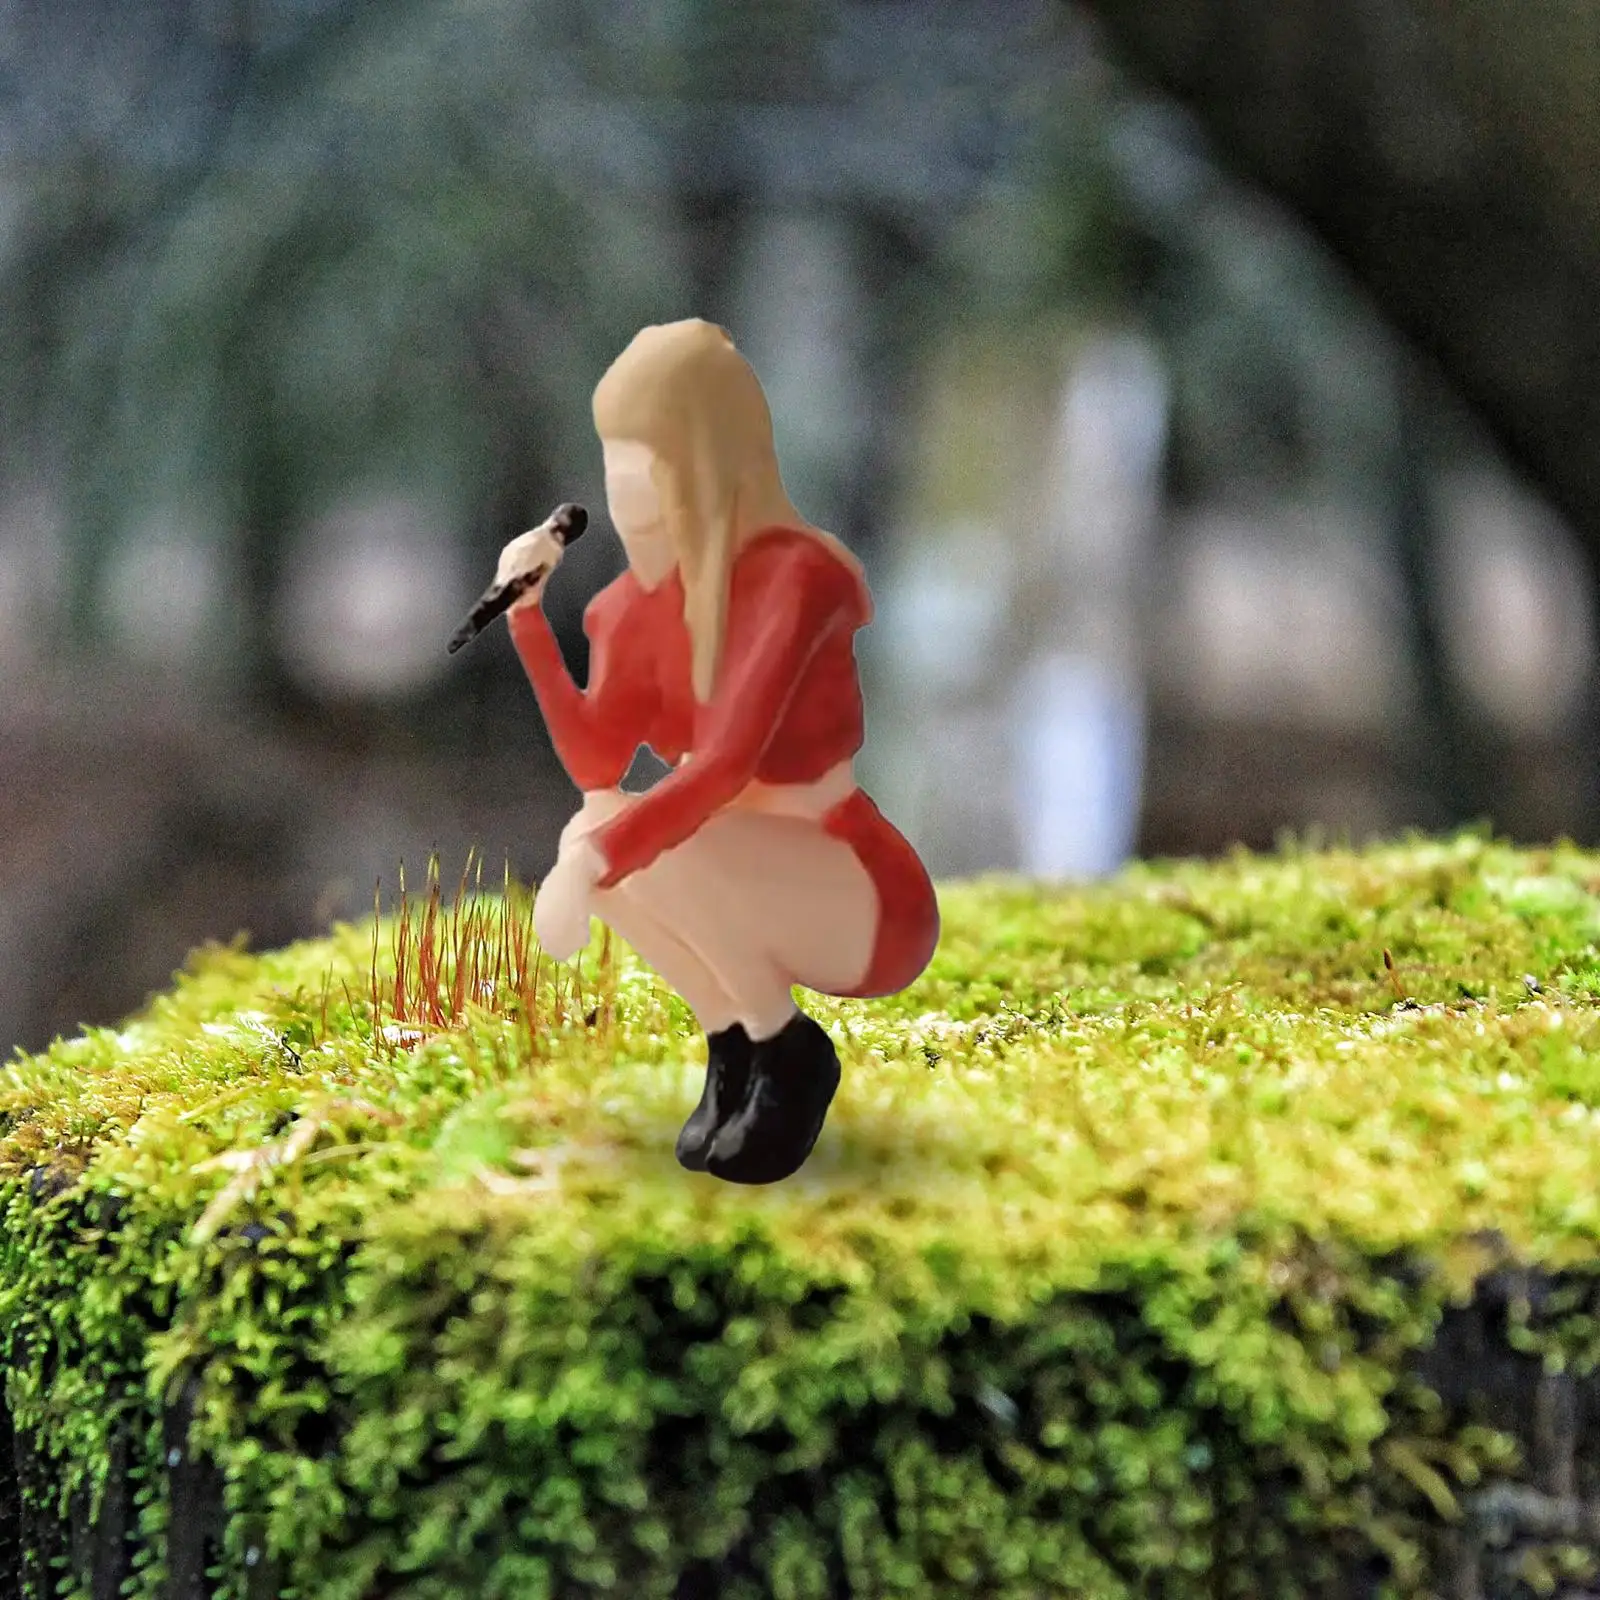 1/64 Scale Singer Model Figures Simulation Figurines Ornament Miniature Model Figures Diorama Layout Miniature Scenes Decor